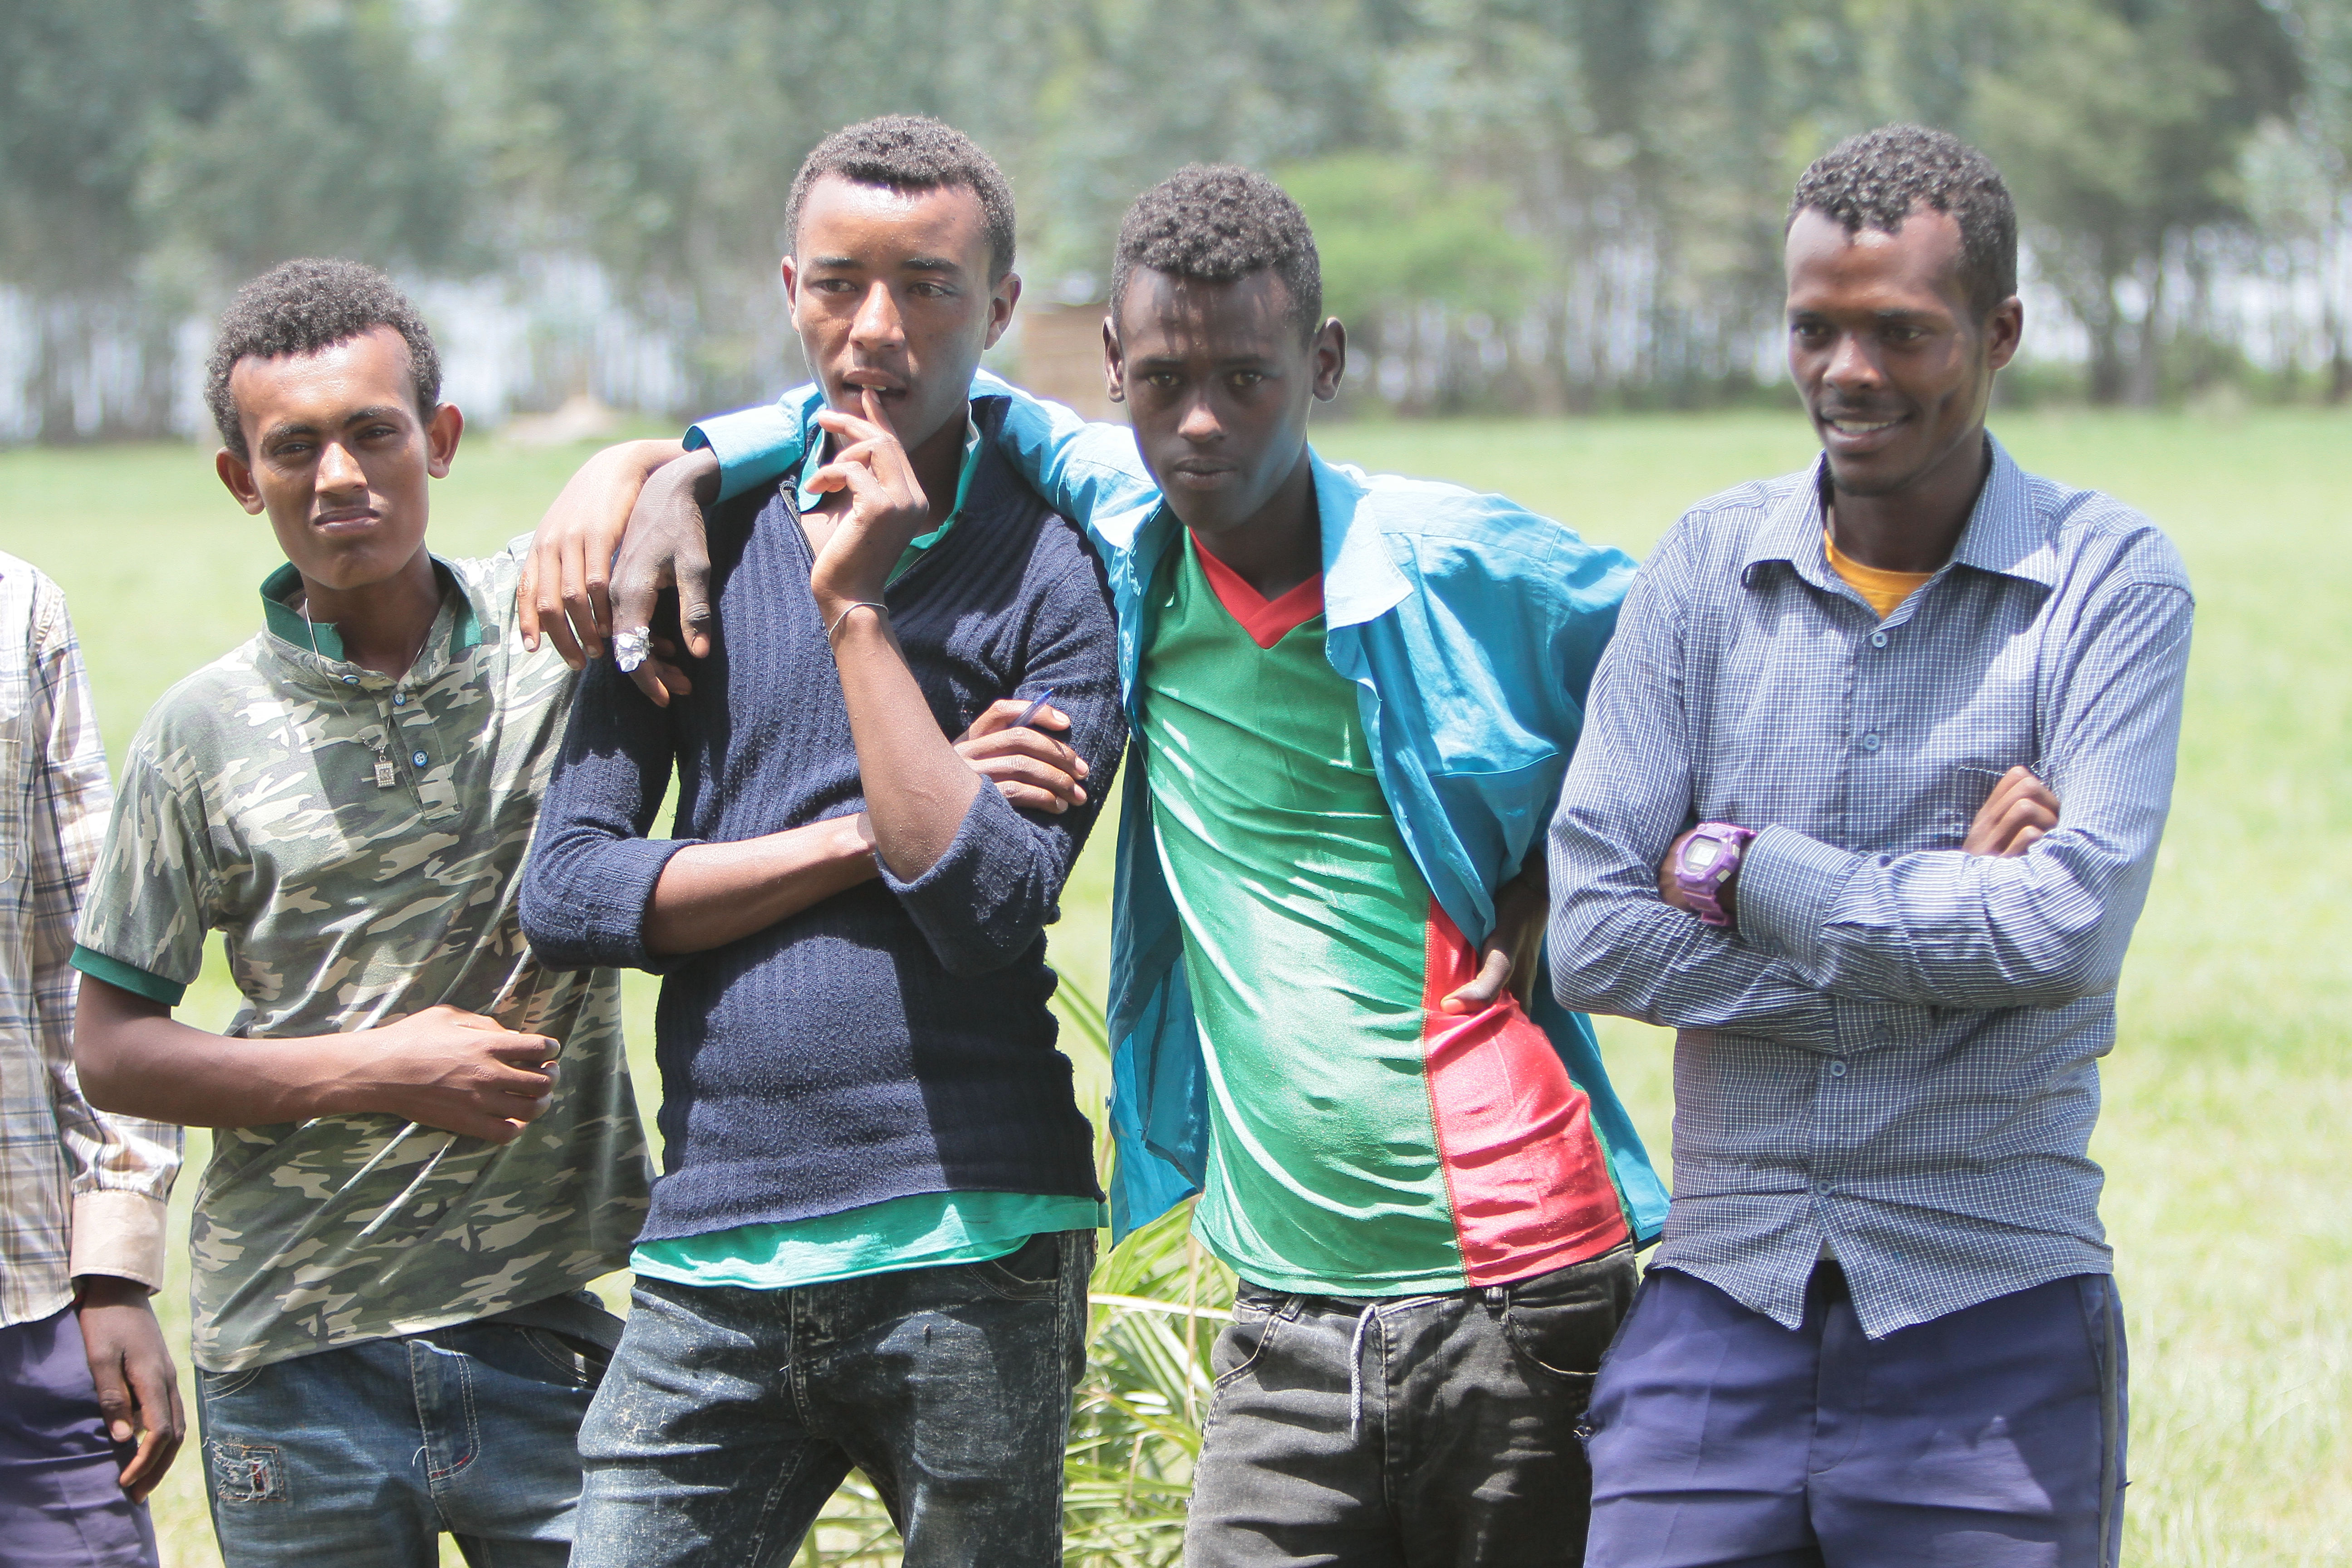 The economy's improving but many Ethiopian boys still 'feel hopeless'